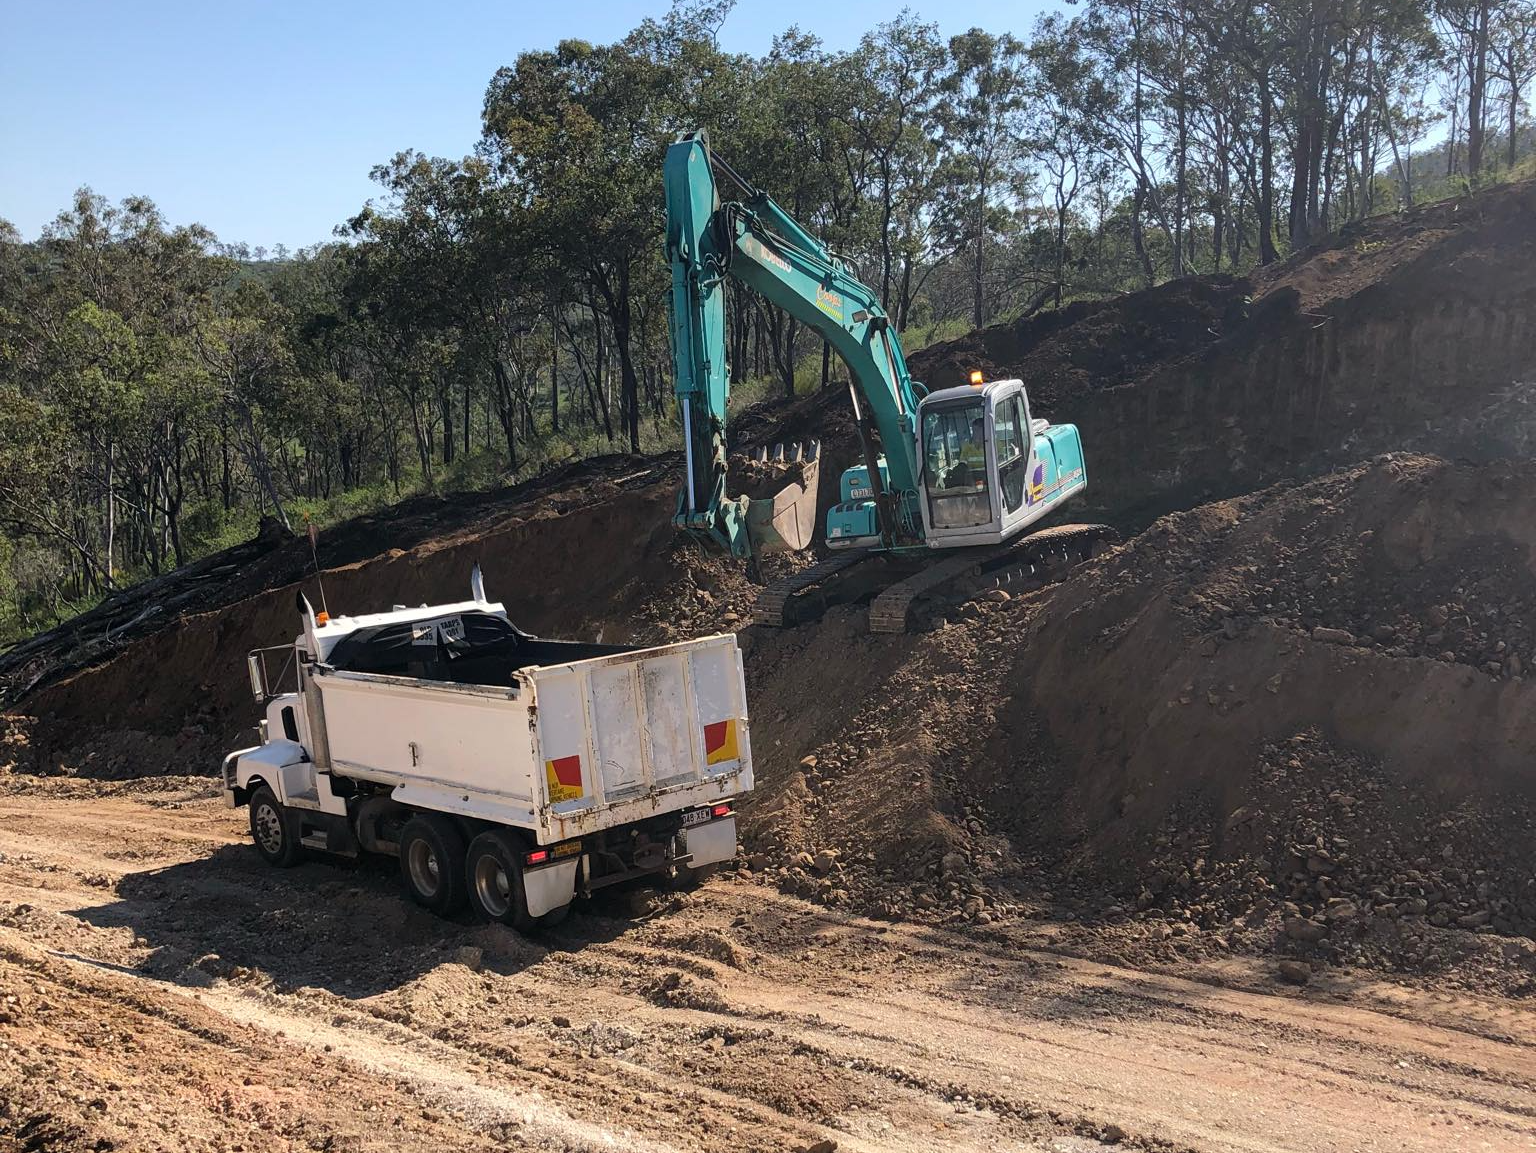 Excavator and dump truck